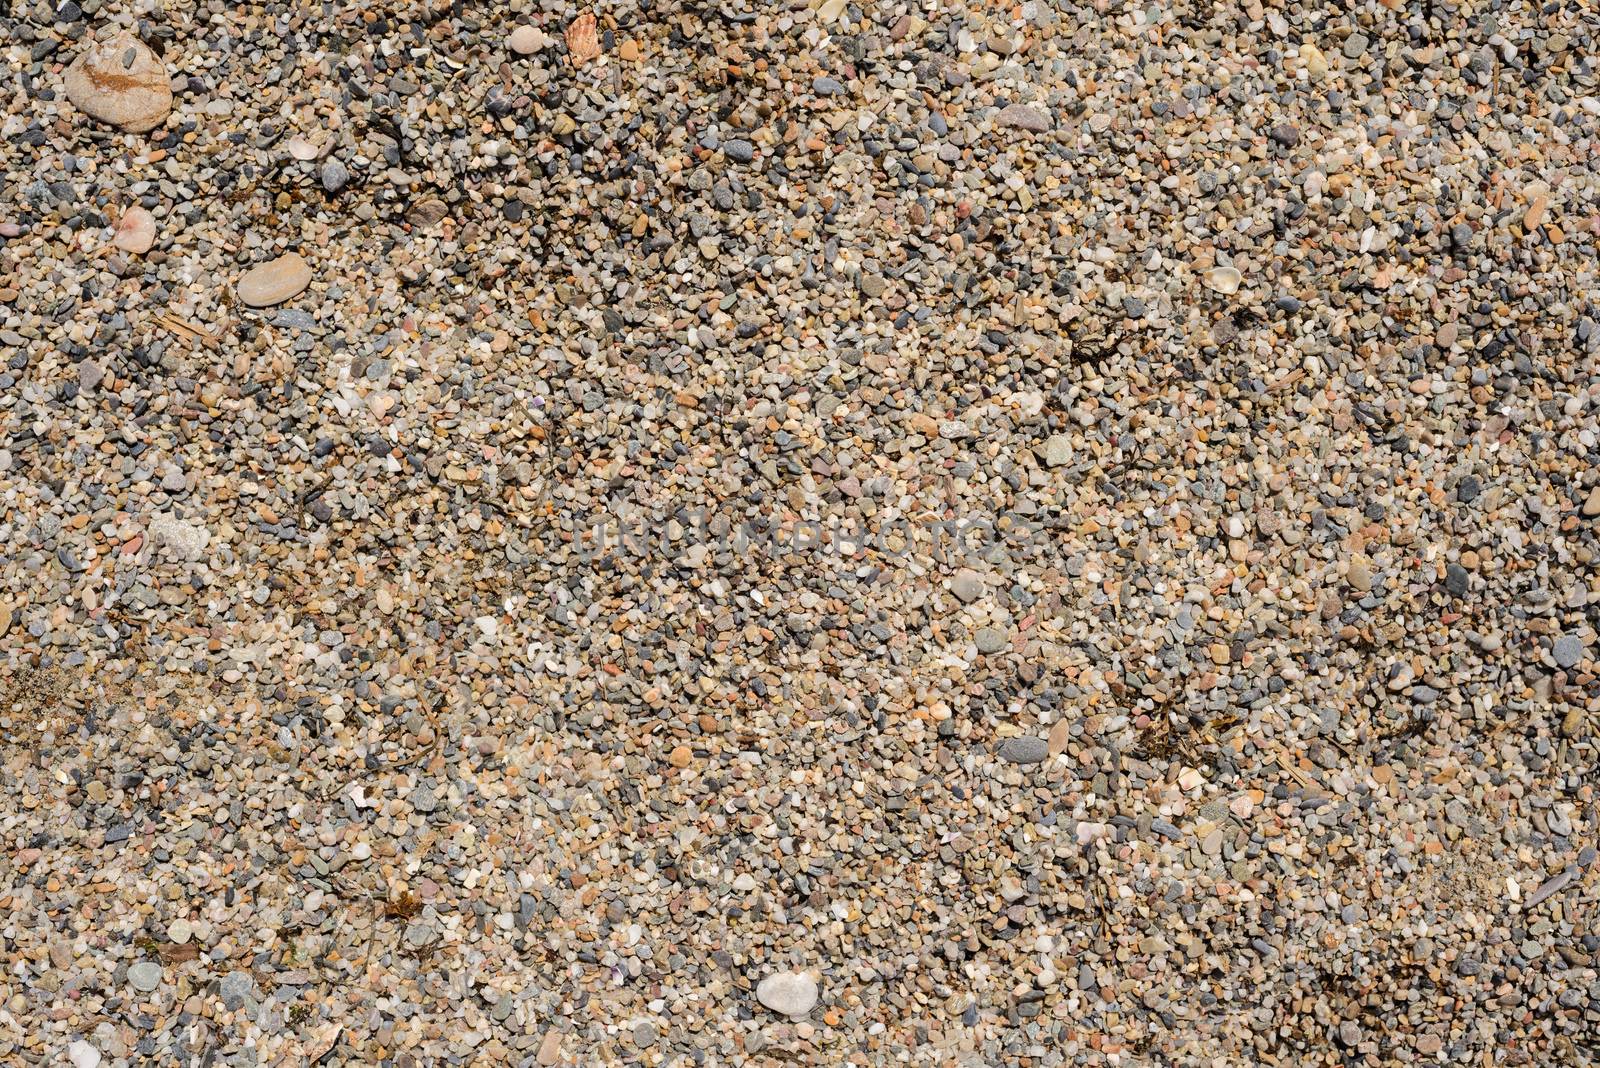 Tiny grains of sand macro close up texture, beach